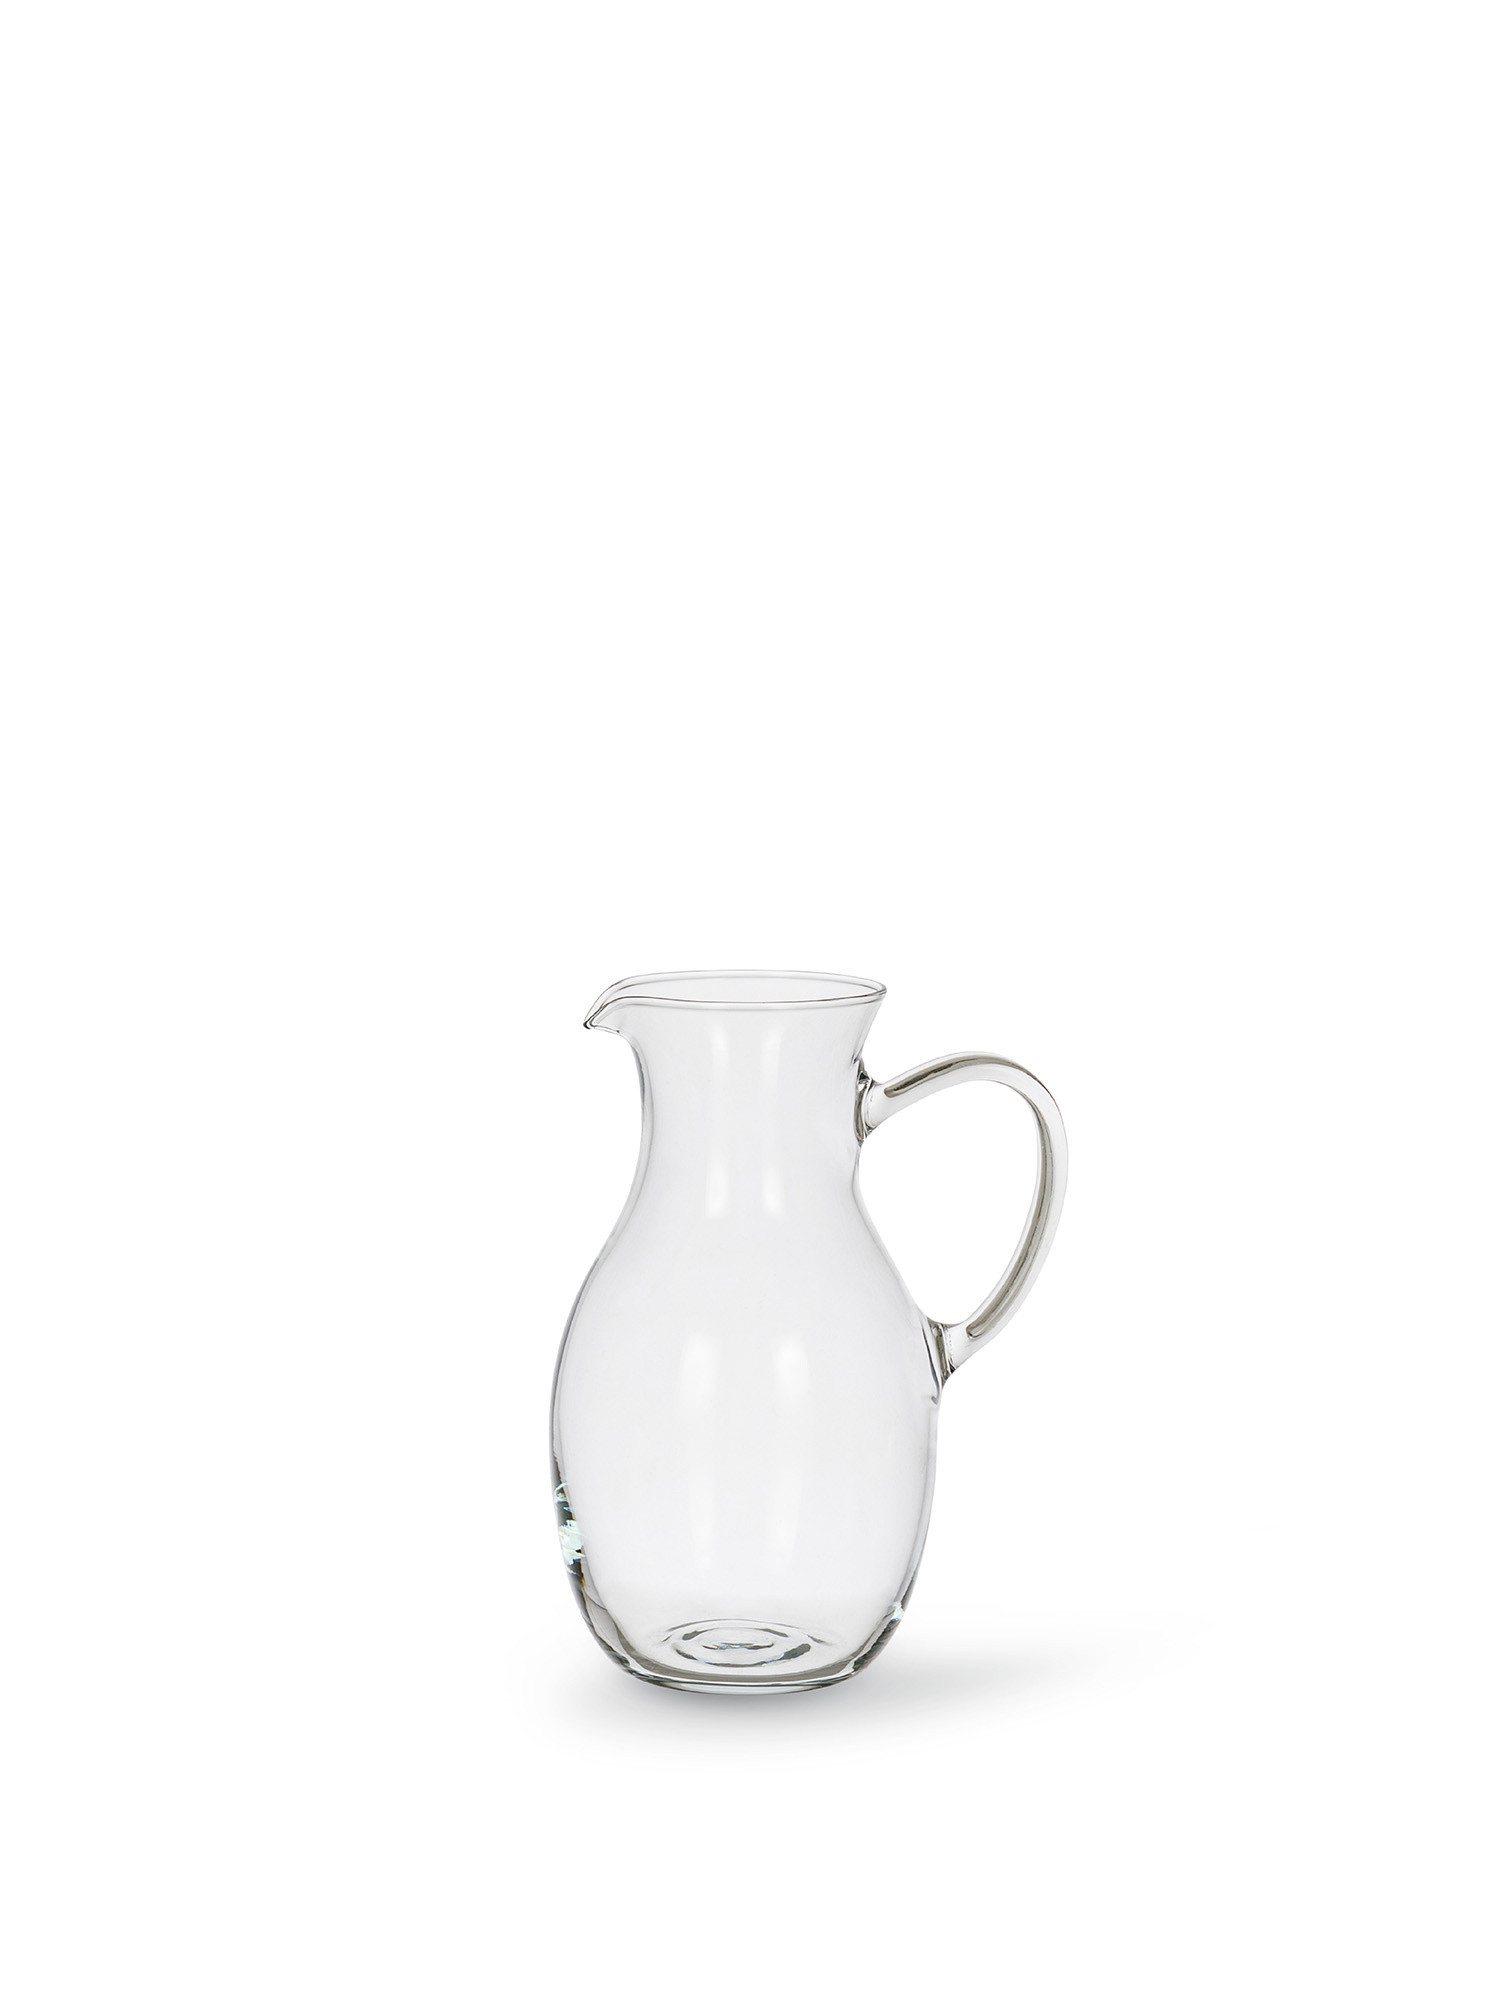 Brocca vetro Klasik, Trasparente, large image number 0